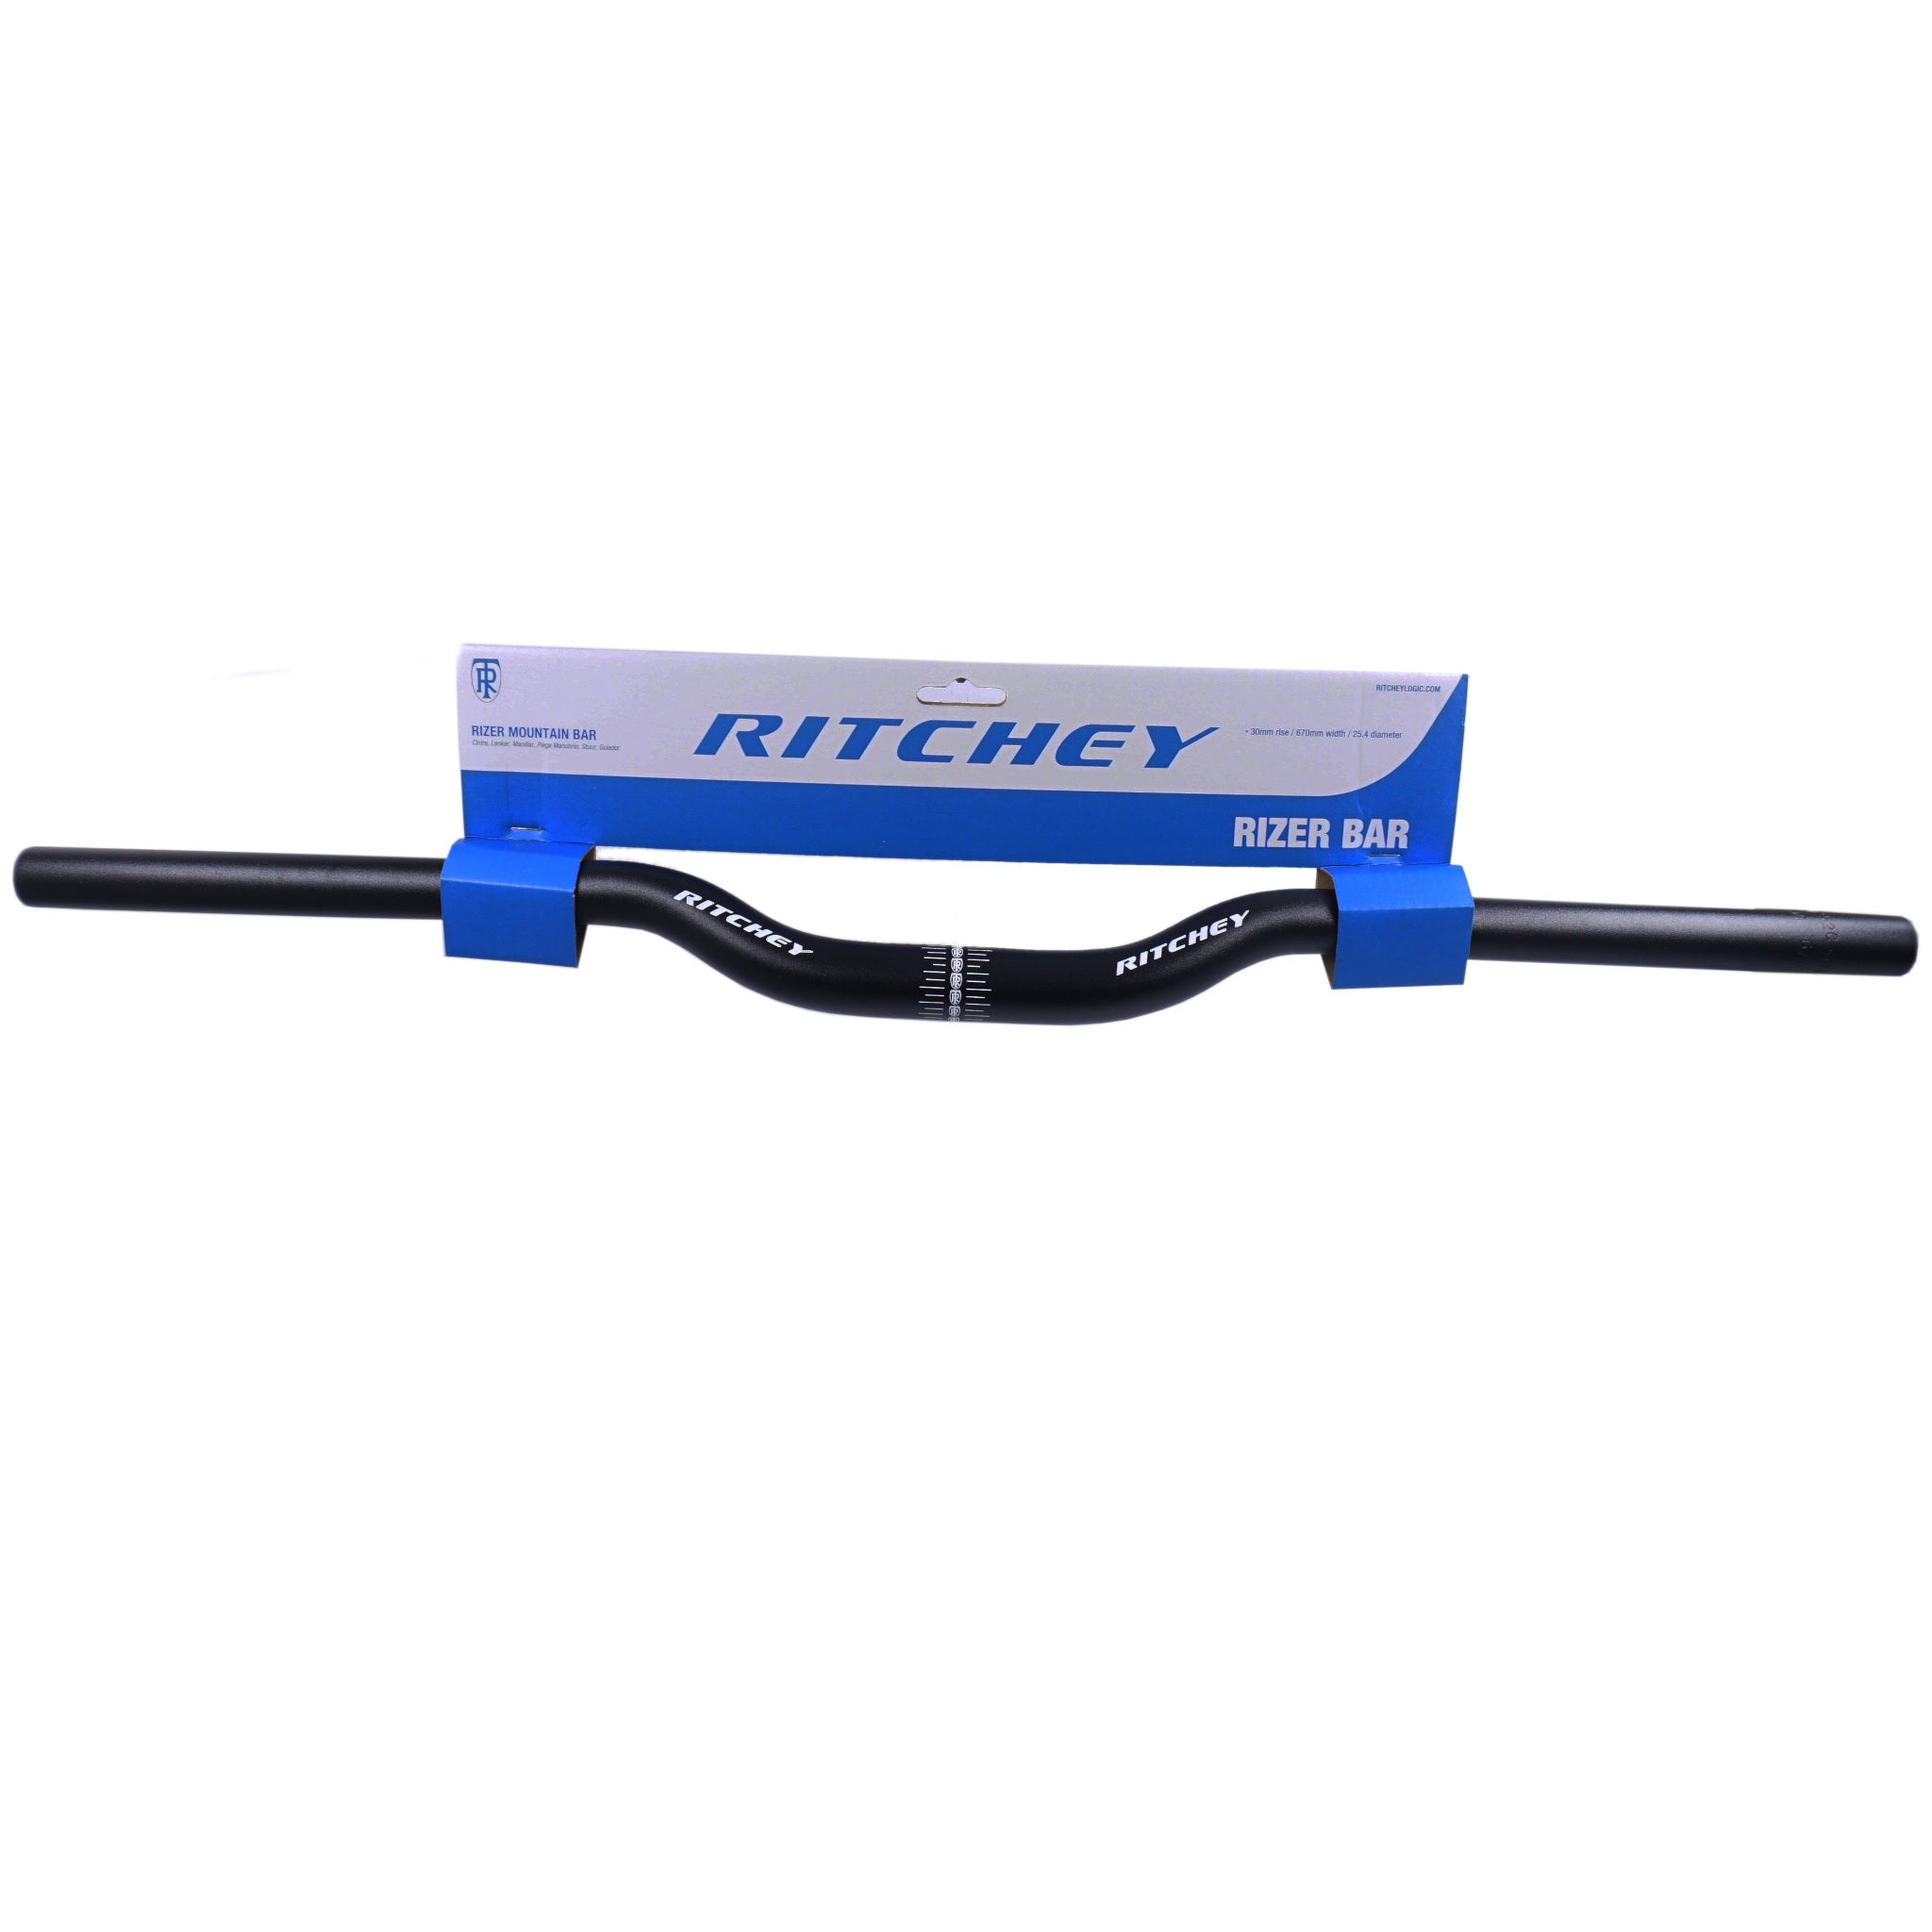 Ritchey Comp SC Rizer Handlebar 670mm 25.4mm Rise 30mm